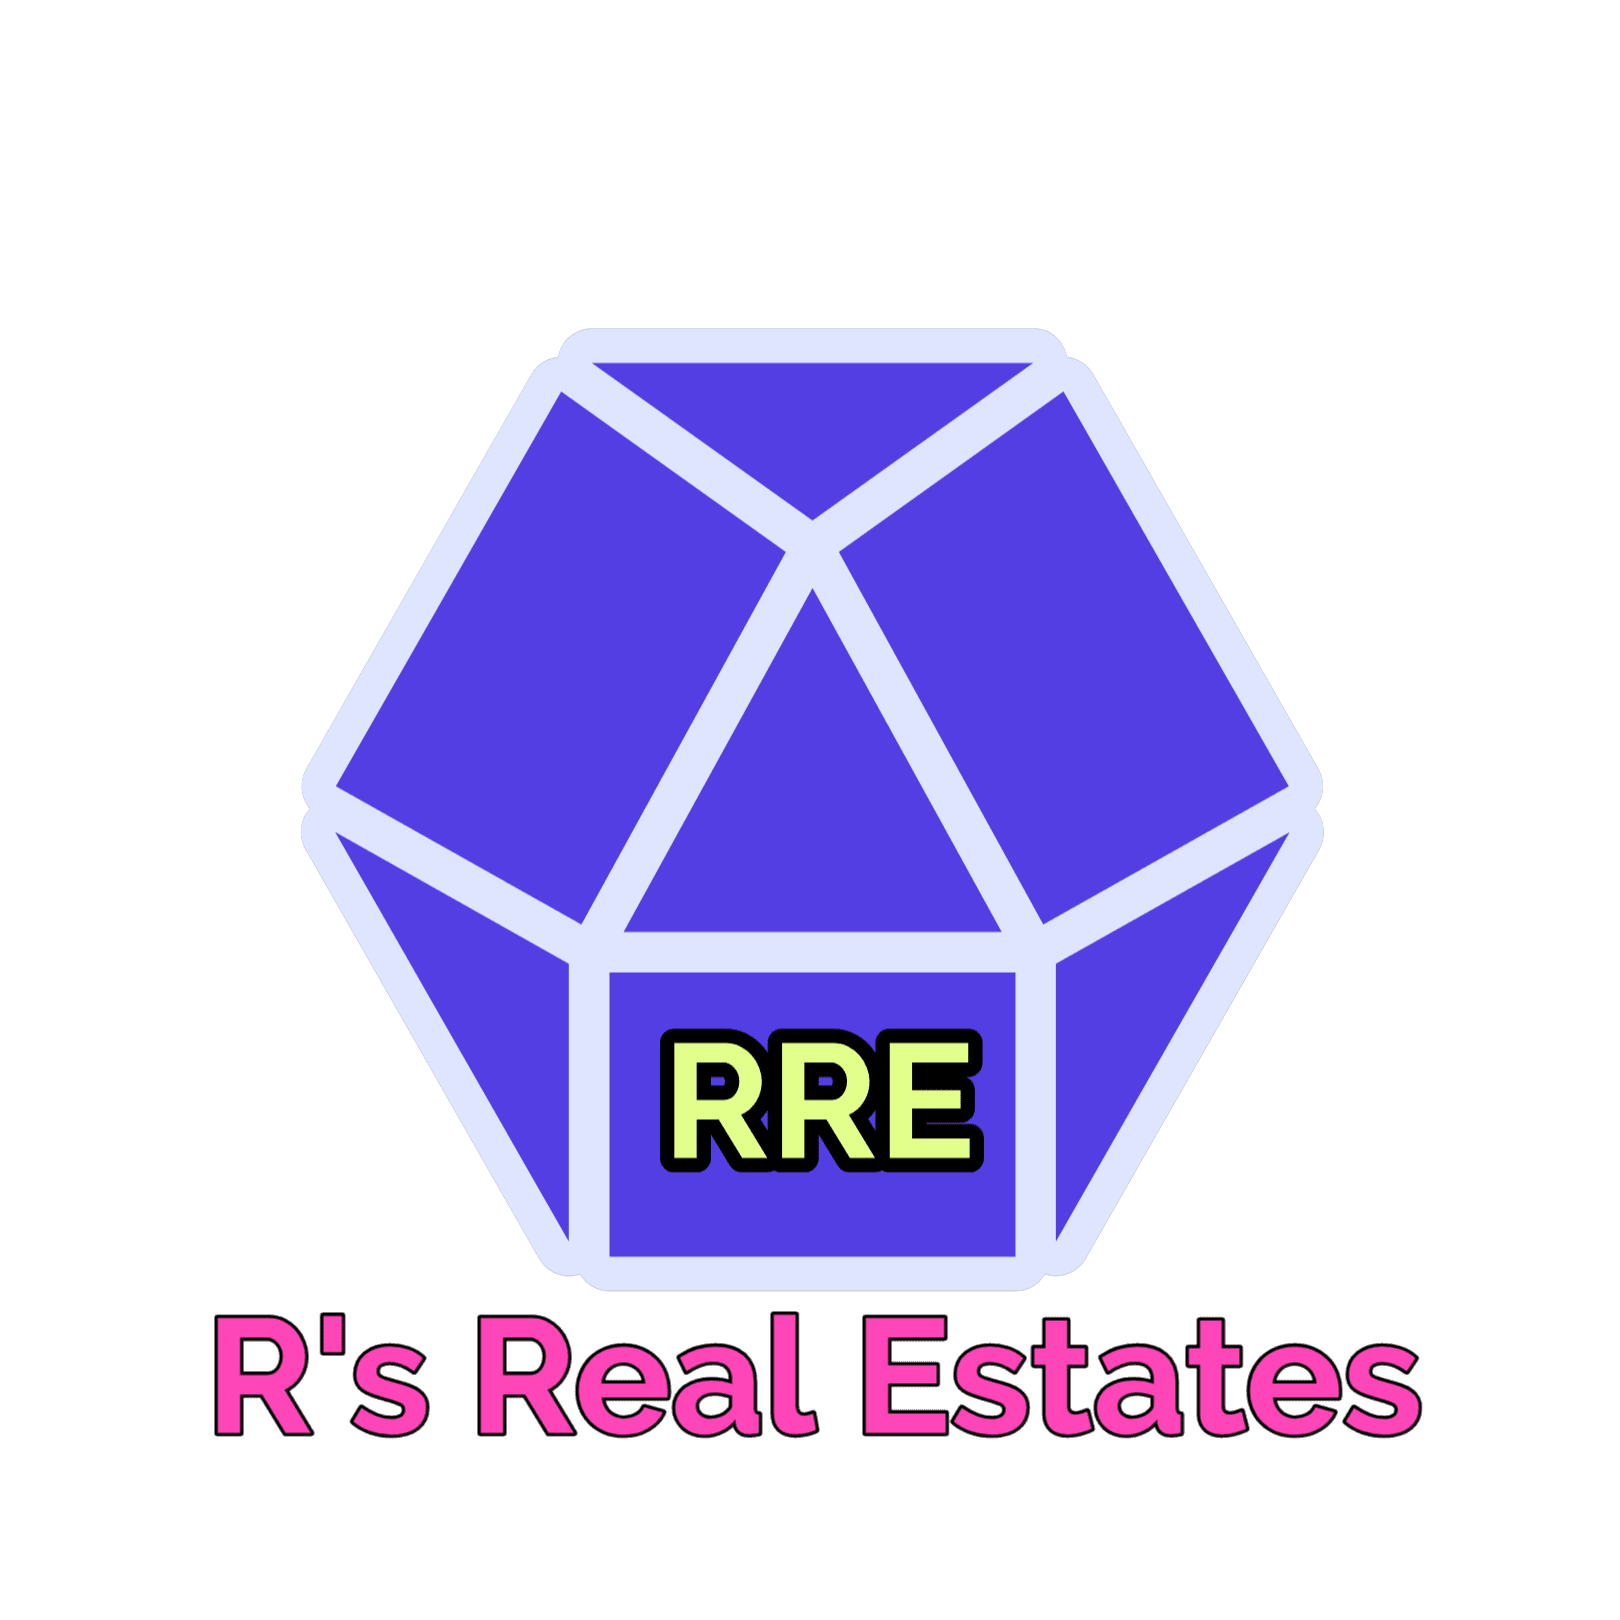 R's Real Estates